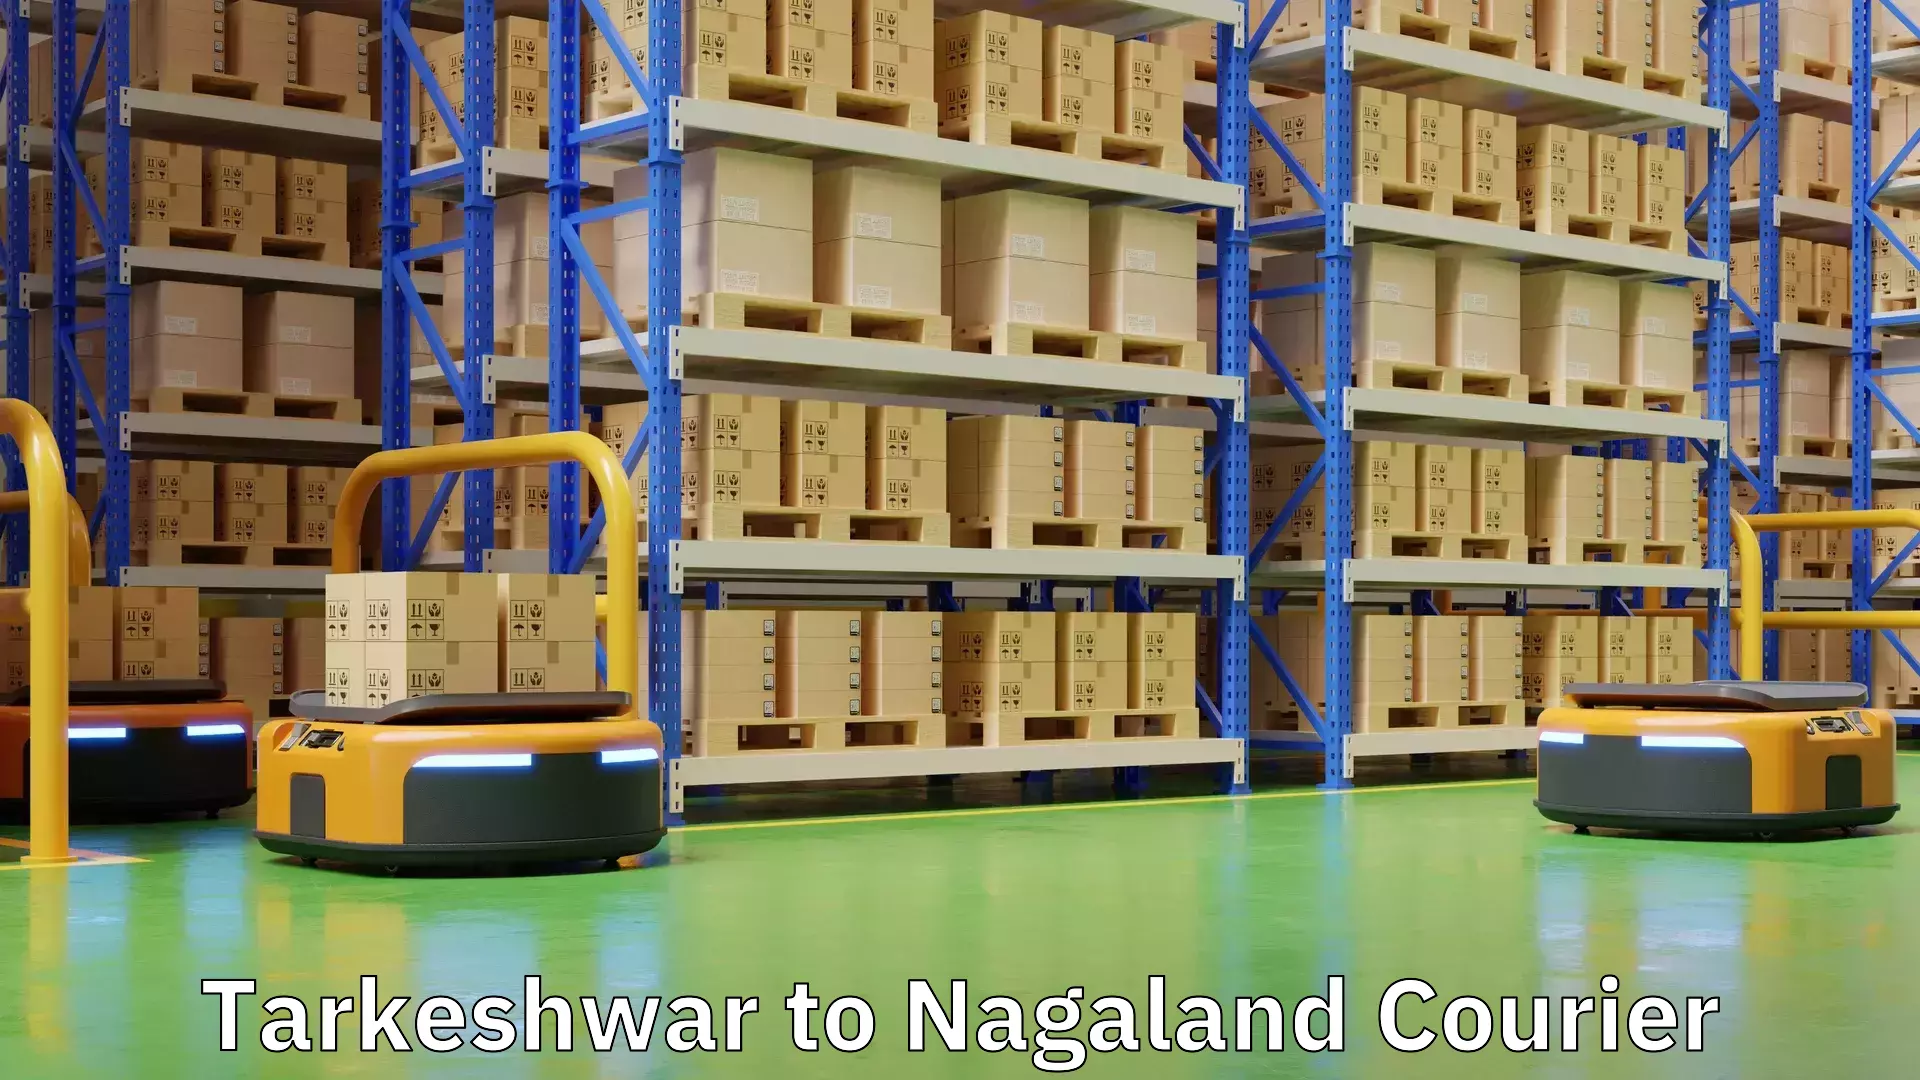 Express postal services Tarkeshwar to Nagaland